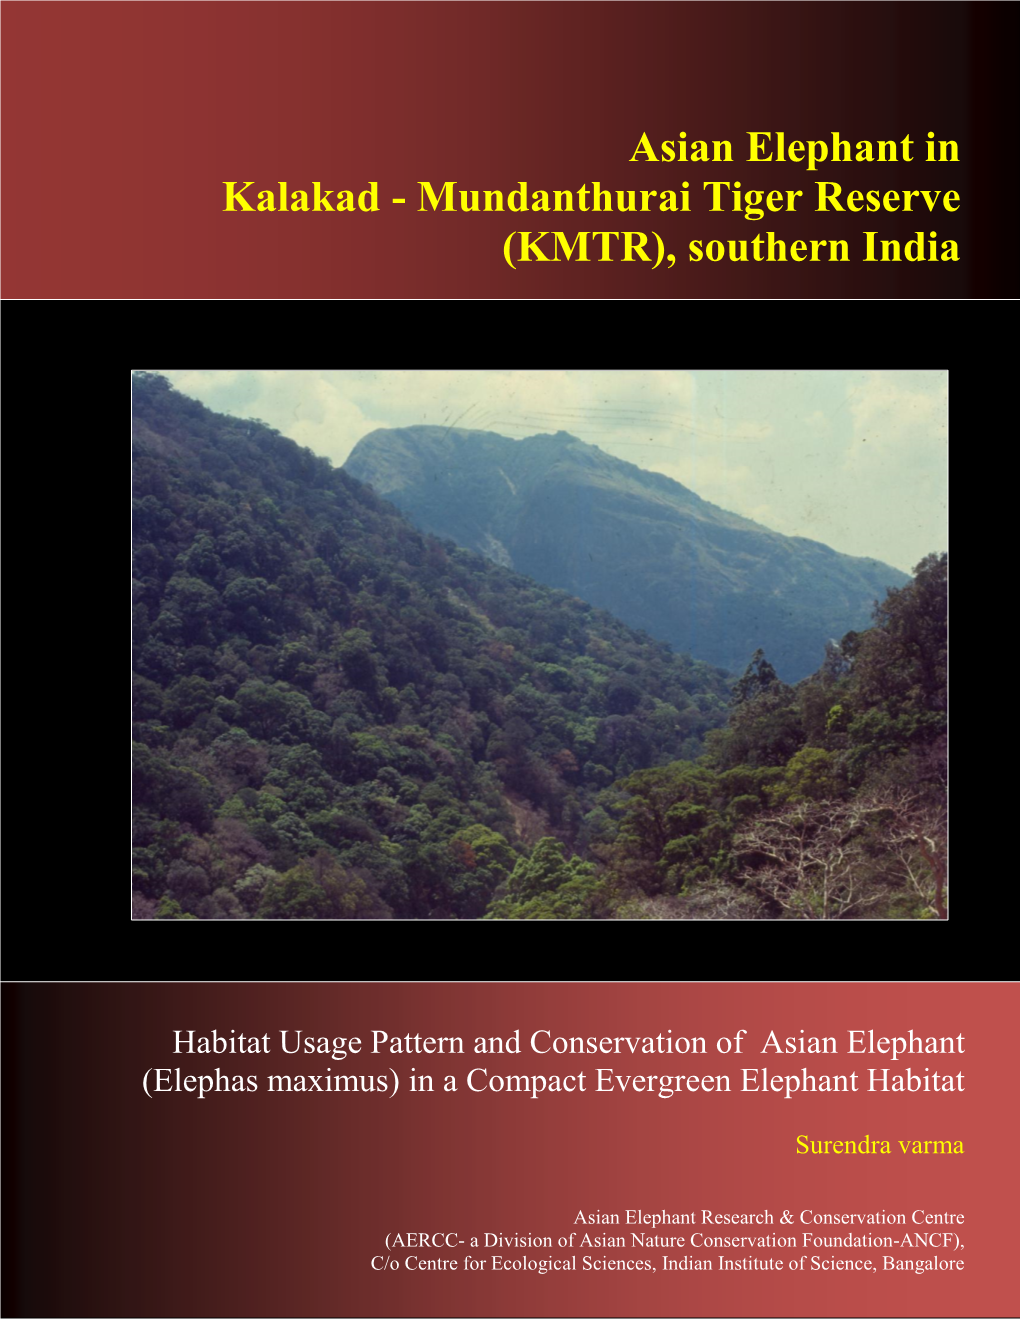 Mundanthurai Tiger Reserve (KMTR), Southern India